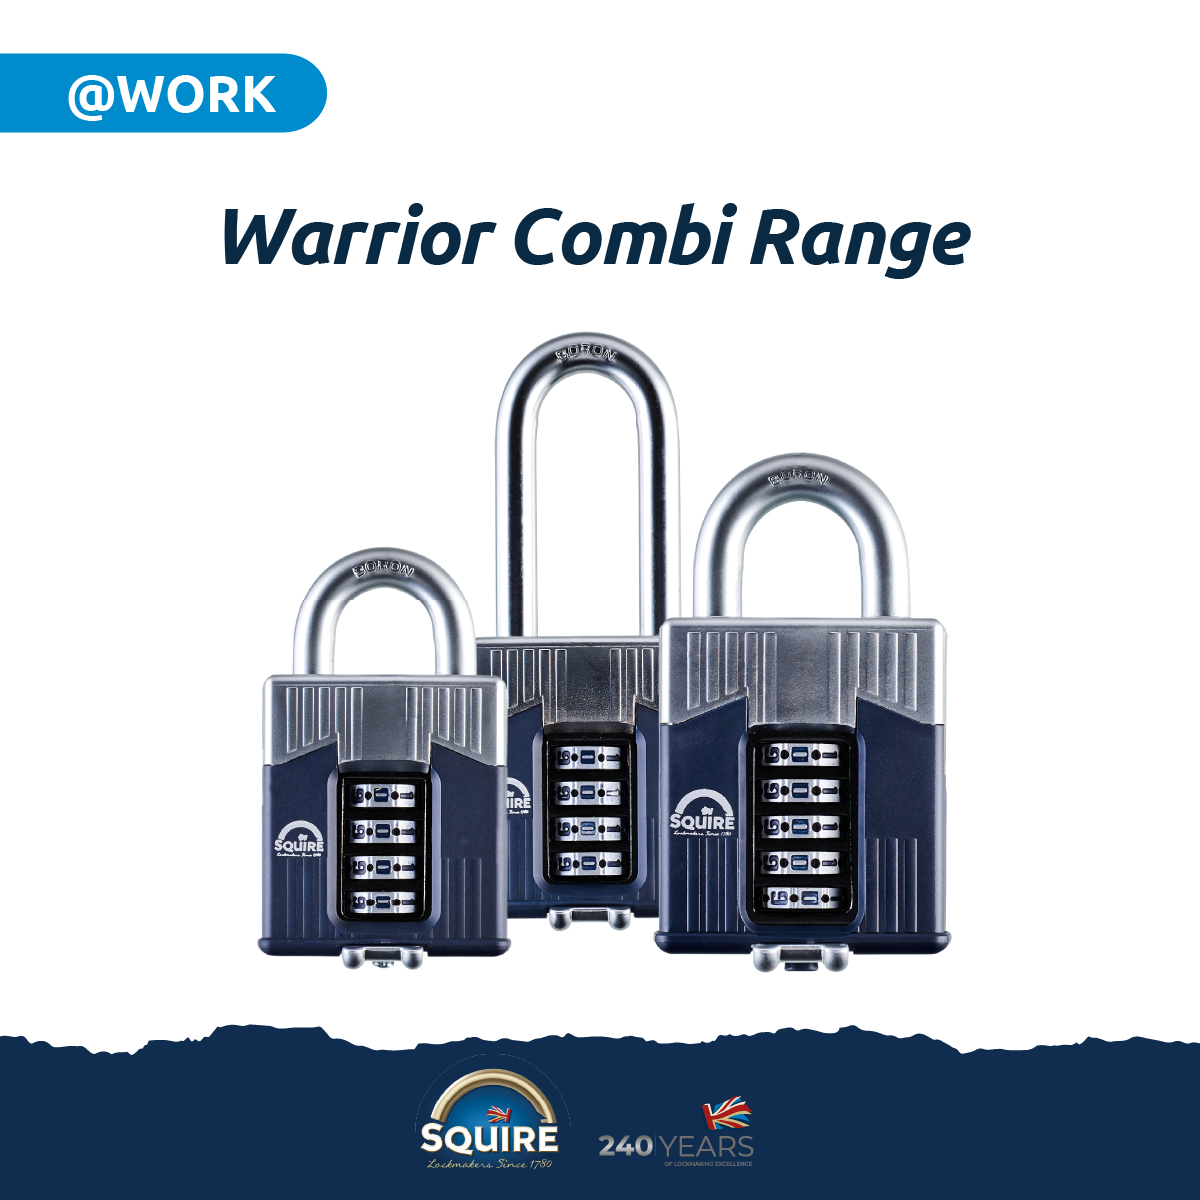 Warrior® Combi 55/2.5 Long Shackle Heavy Duty Padlock